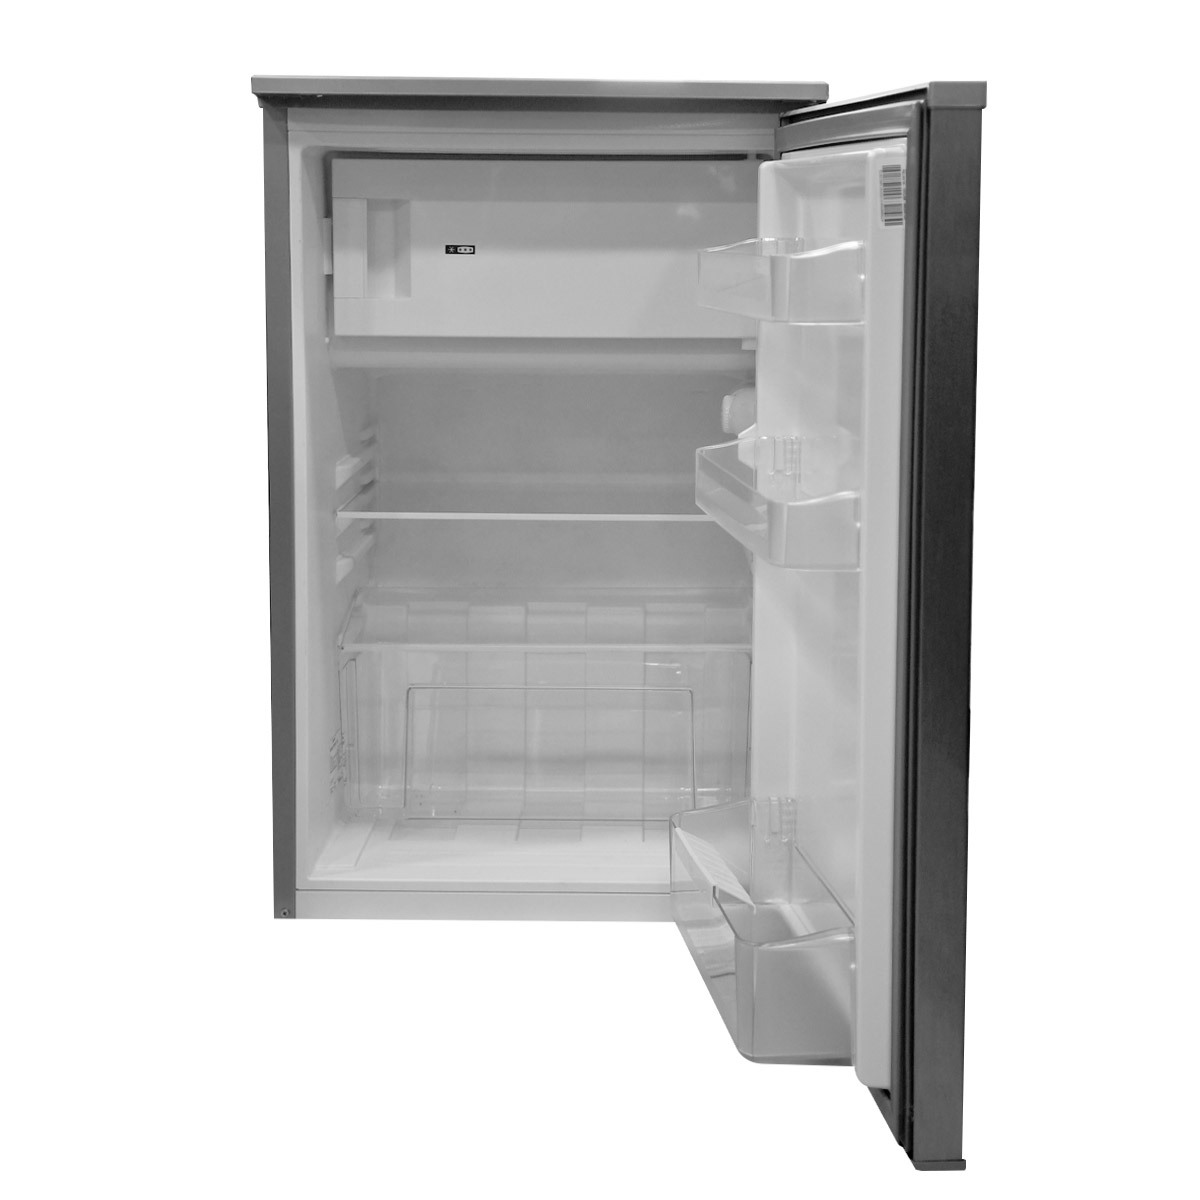  Réfrigérateur 1 battant - Signature - SVR 031 IXL - 122L  | Glotelho Cameroun